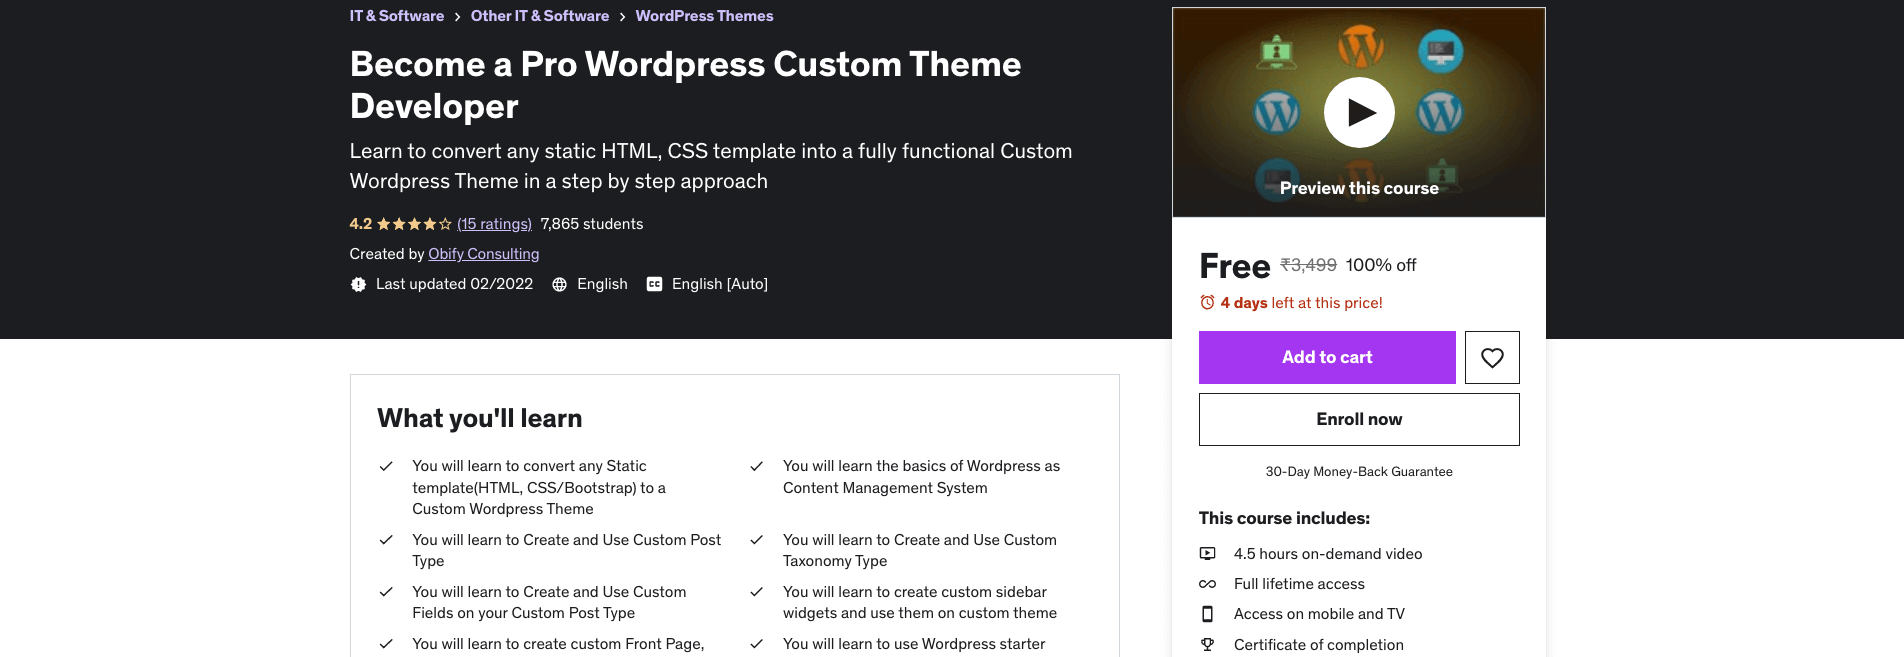 Become a Pro WordPress Custom Theme Developer